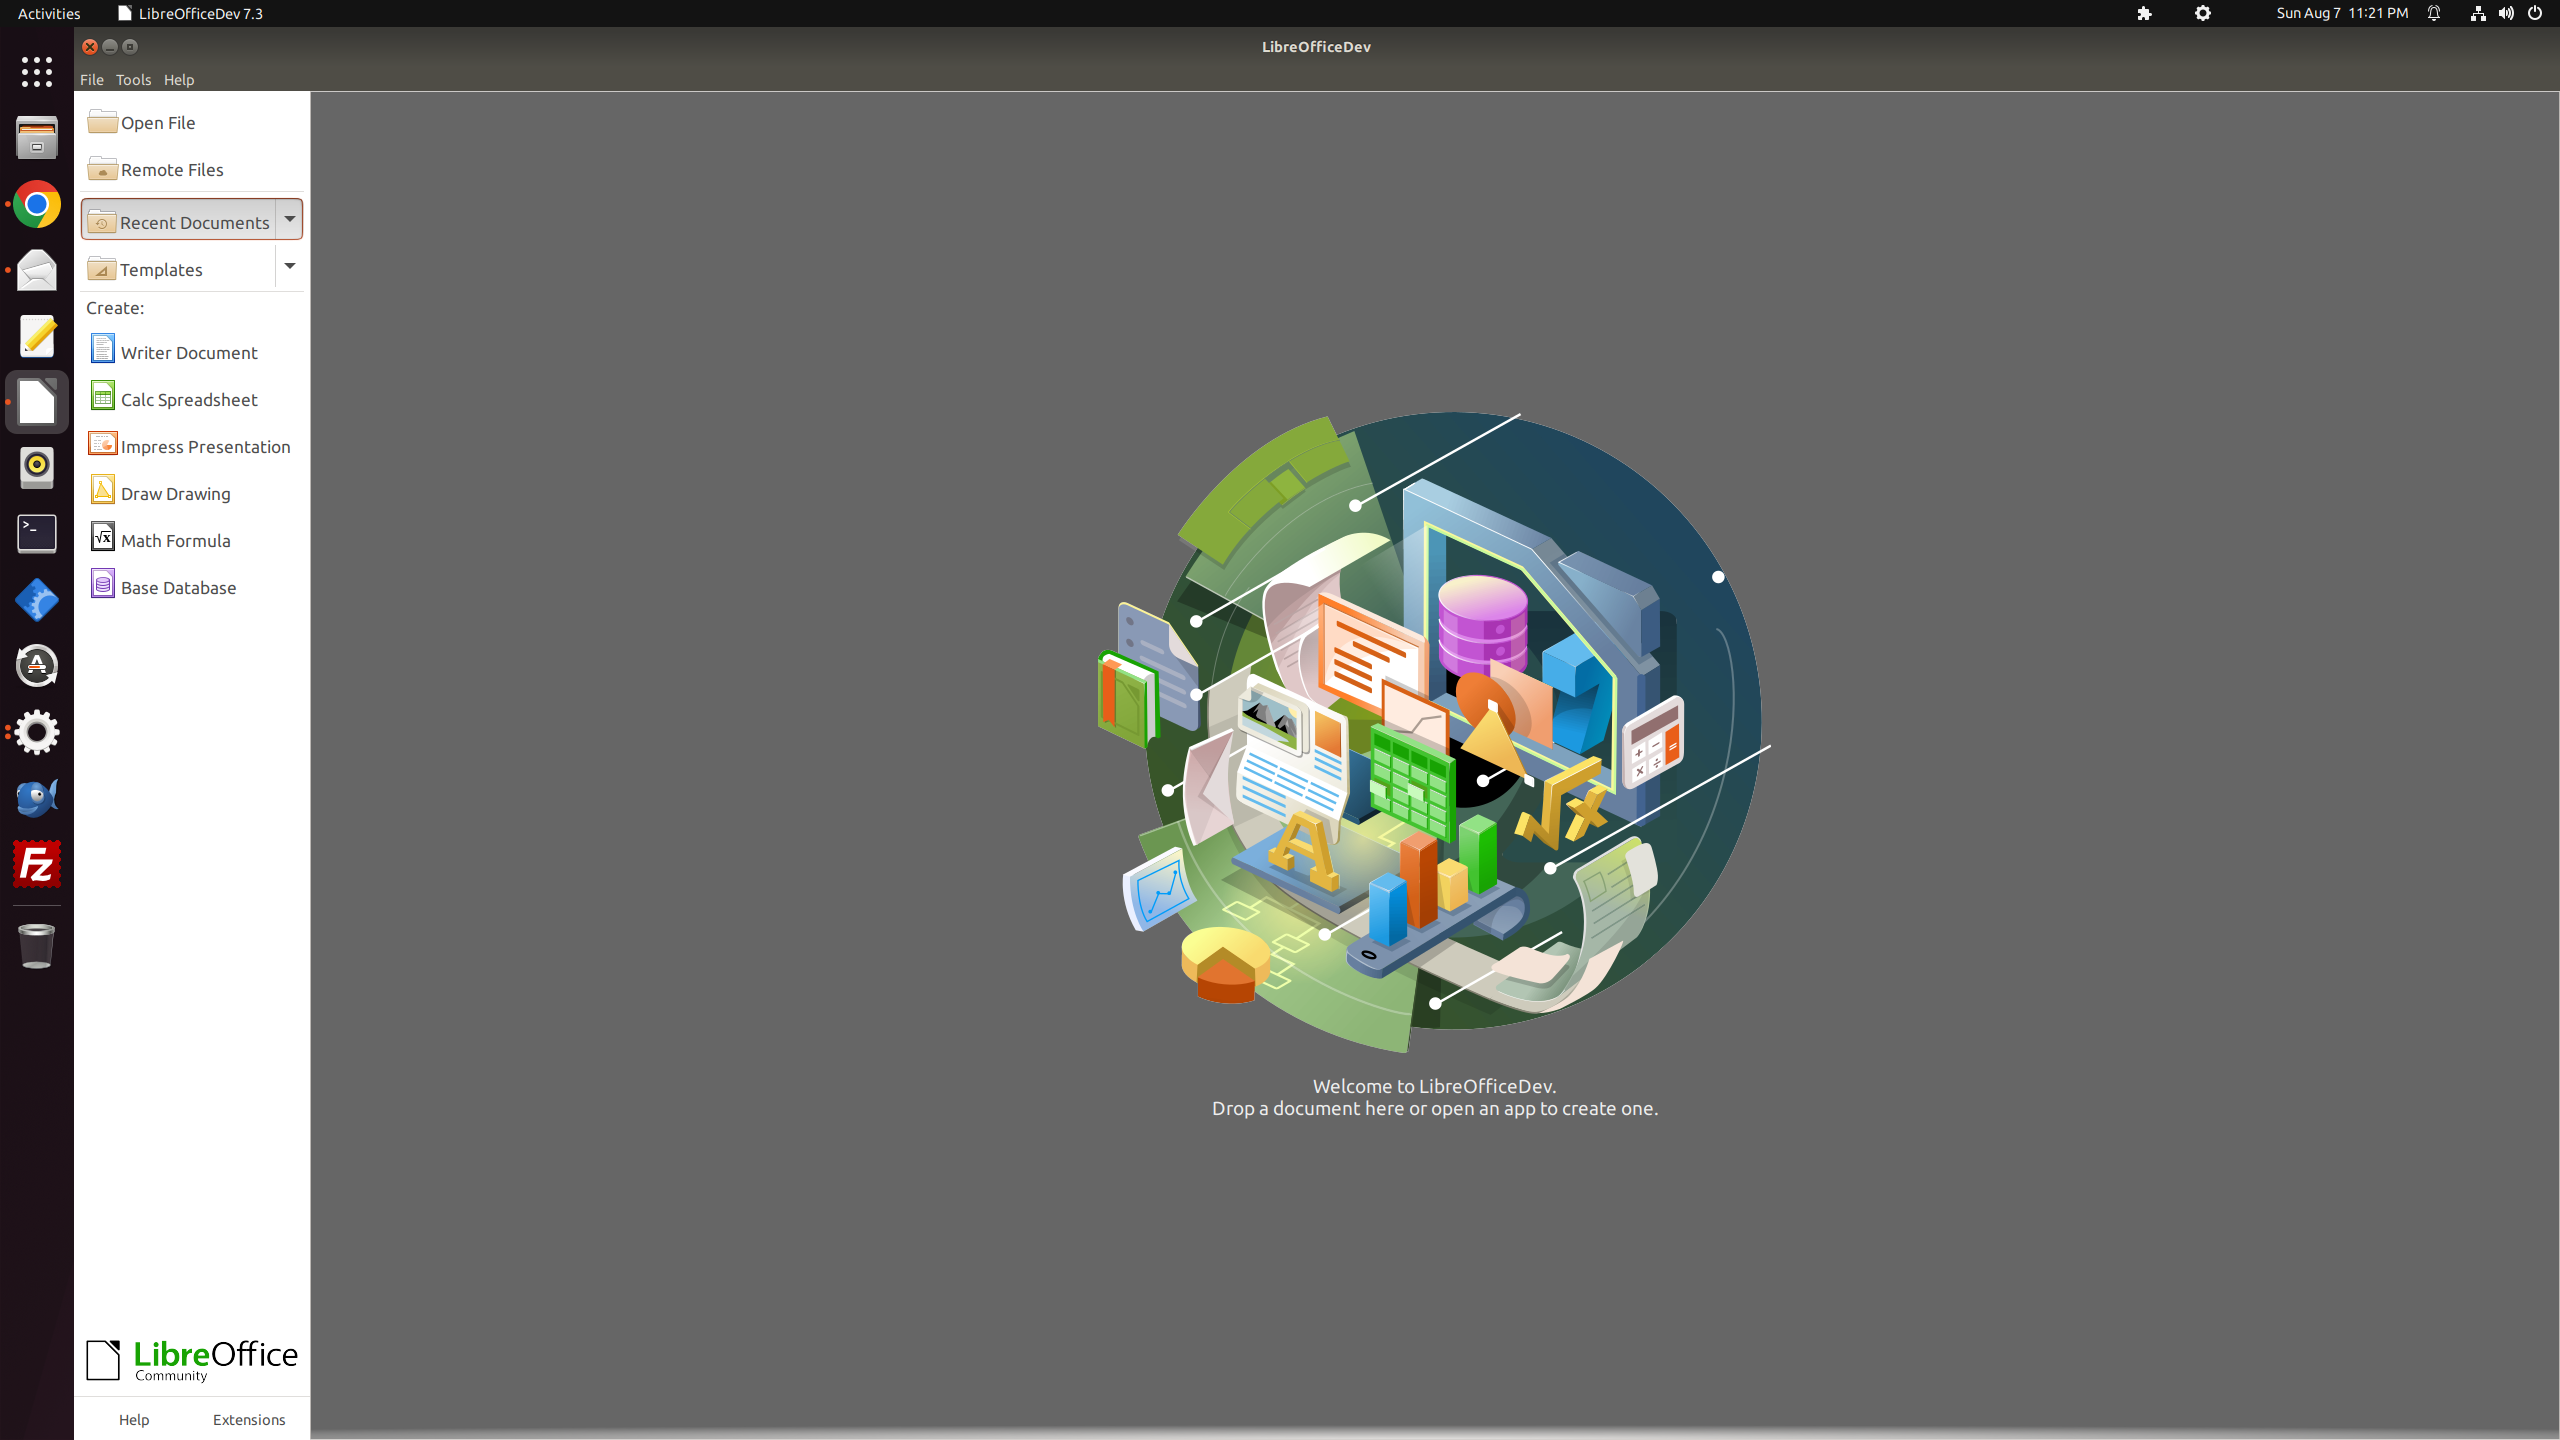 LibreOffice opening screen